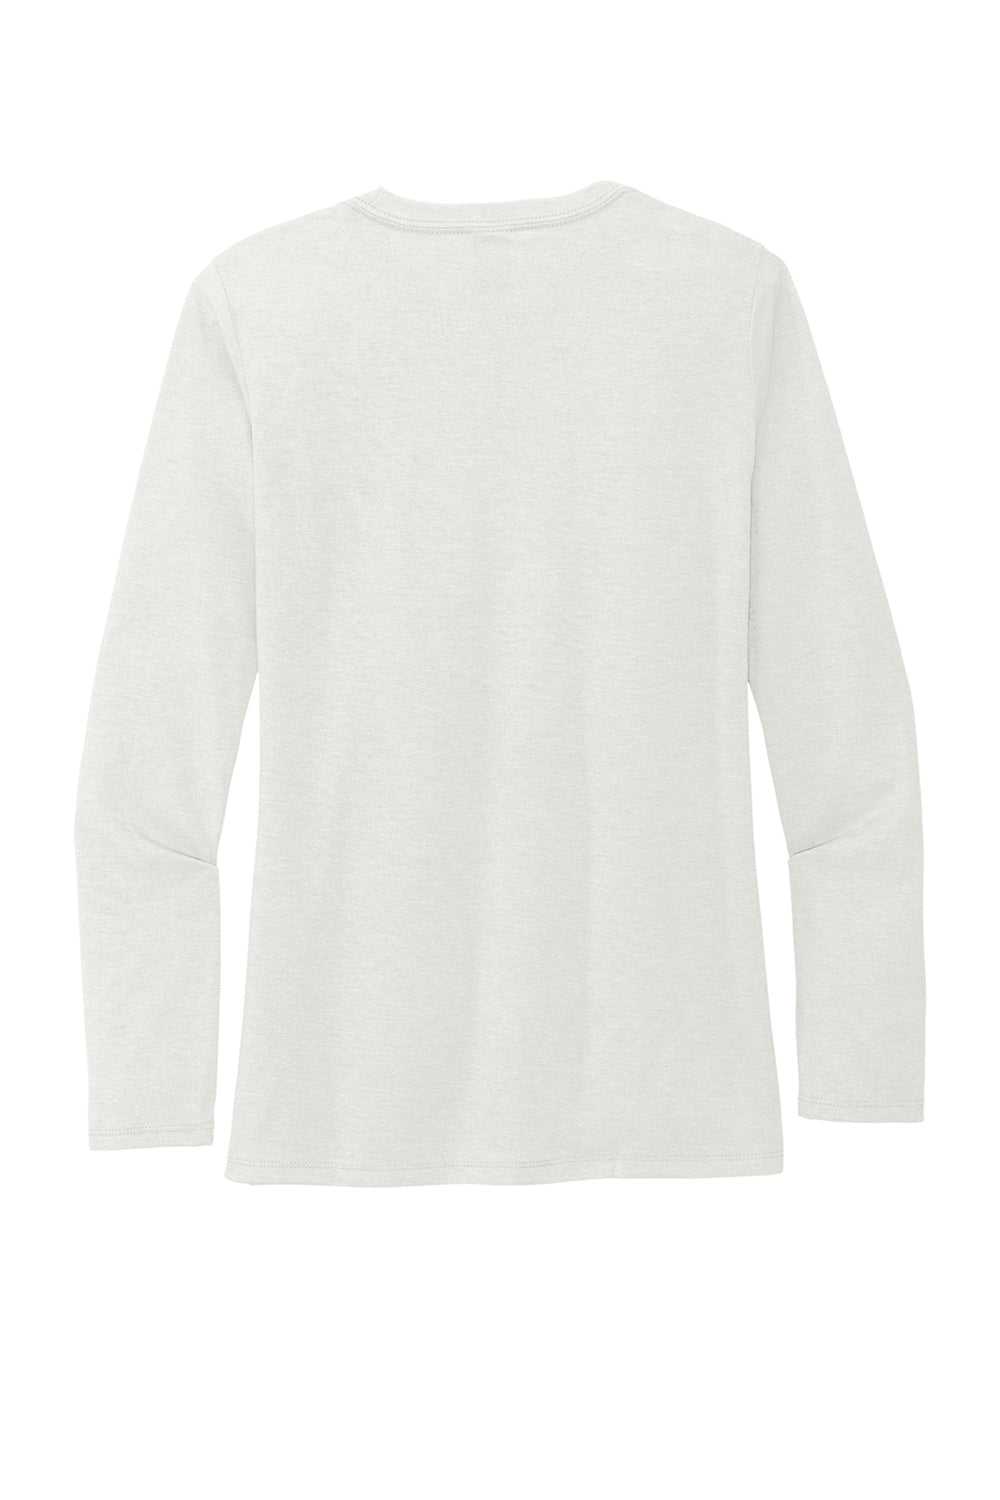 Allmade AL6008 Womens Long Sleeve Crewneck T-Shirt Fairly White Flat Back